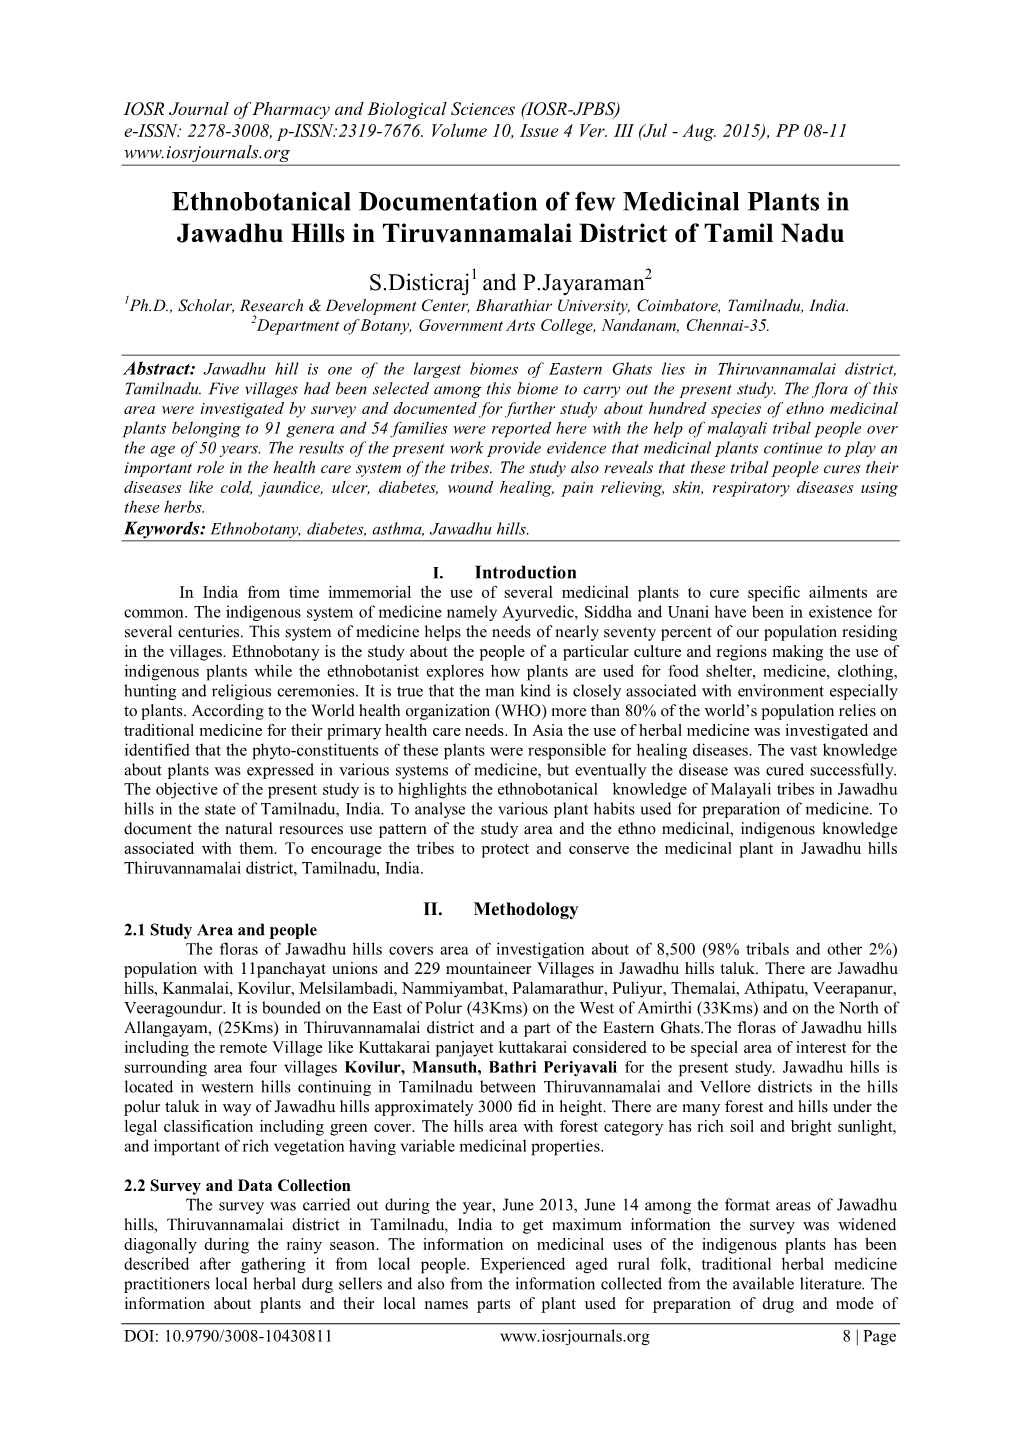 Ethnobotanical Documentation of Few Medicinal Plants in Jawadhu Hills in Tiruvannamalai District of Tamil Nadu